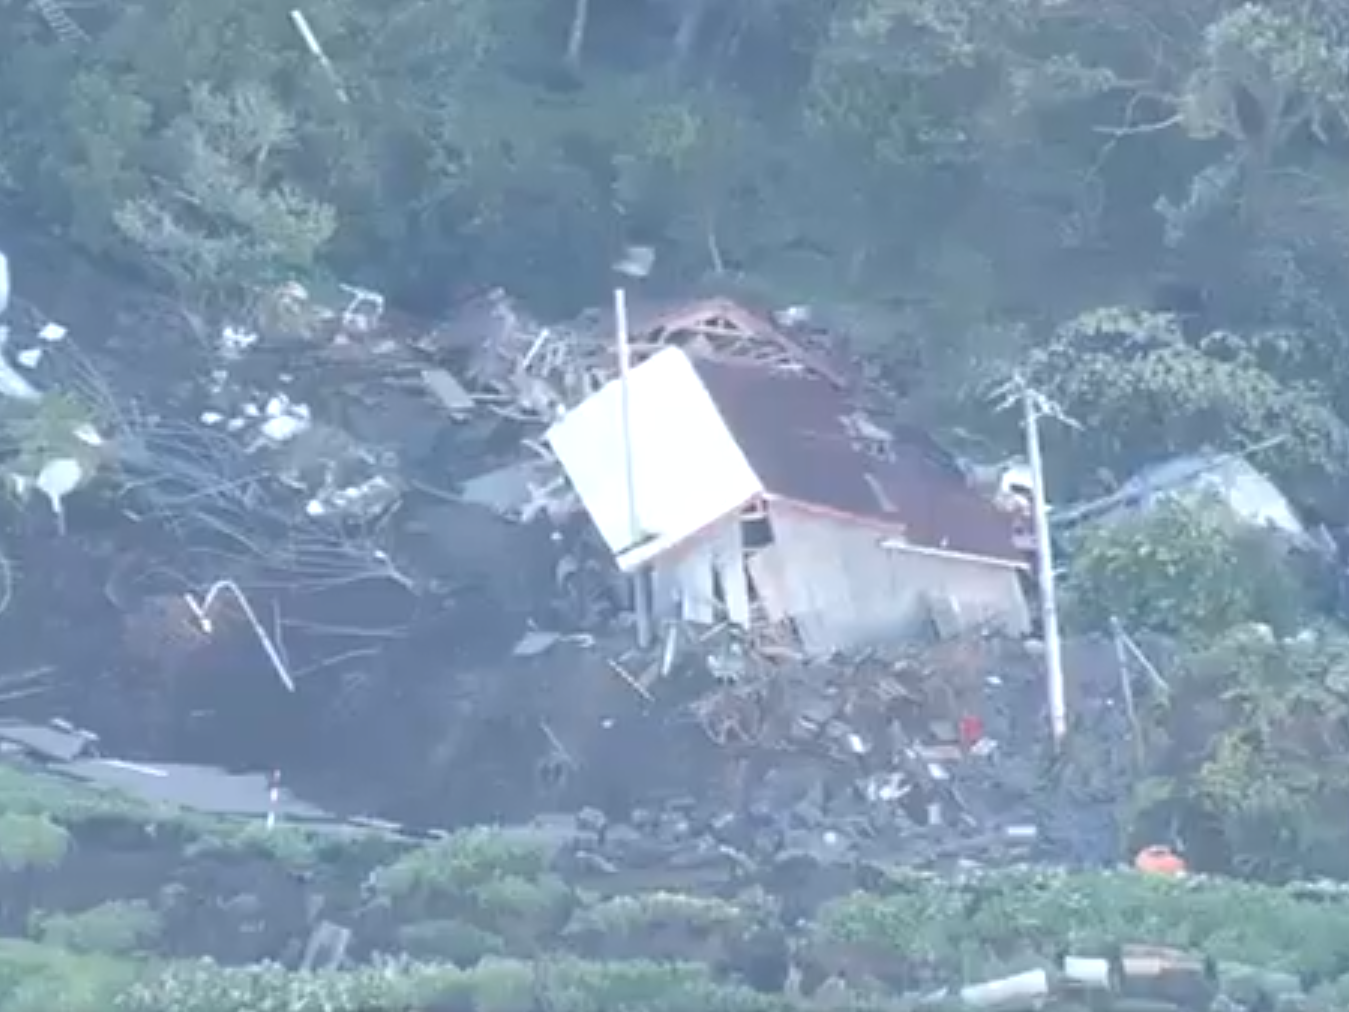 National broadcaster NHK reported a landslide buried houses in Hokkaido